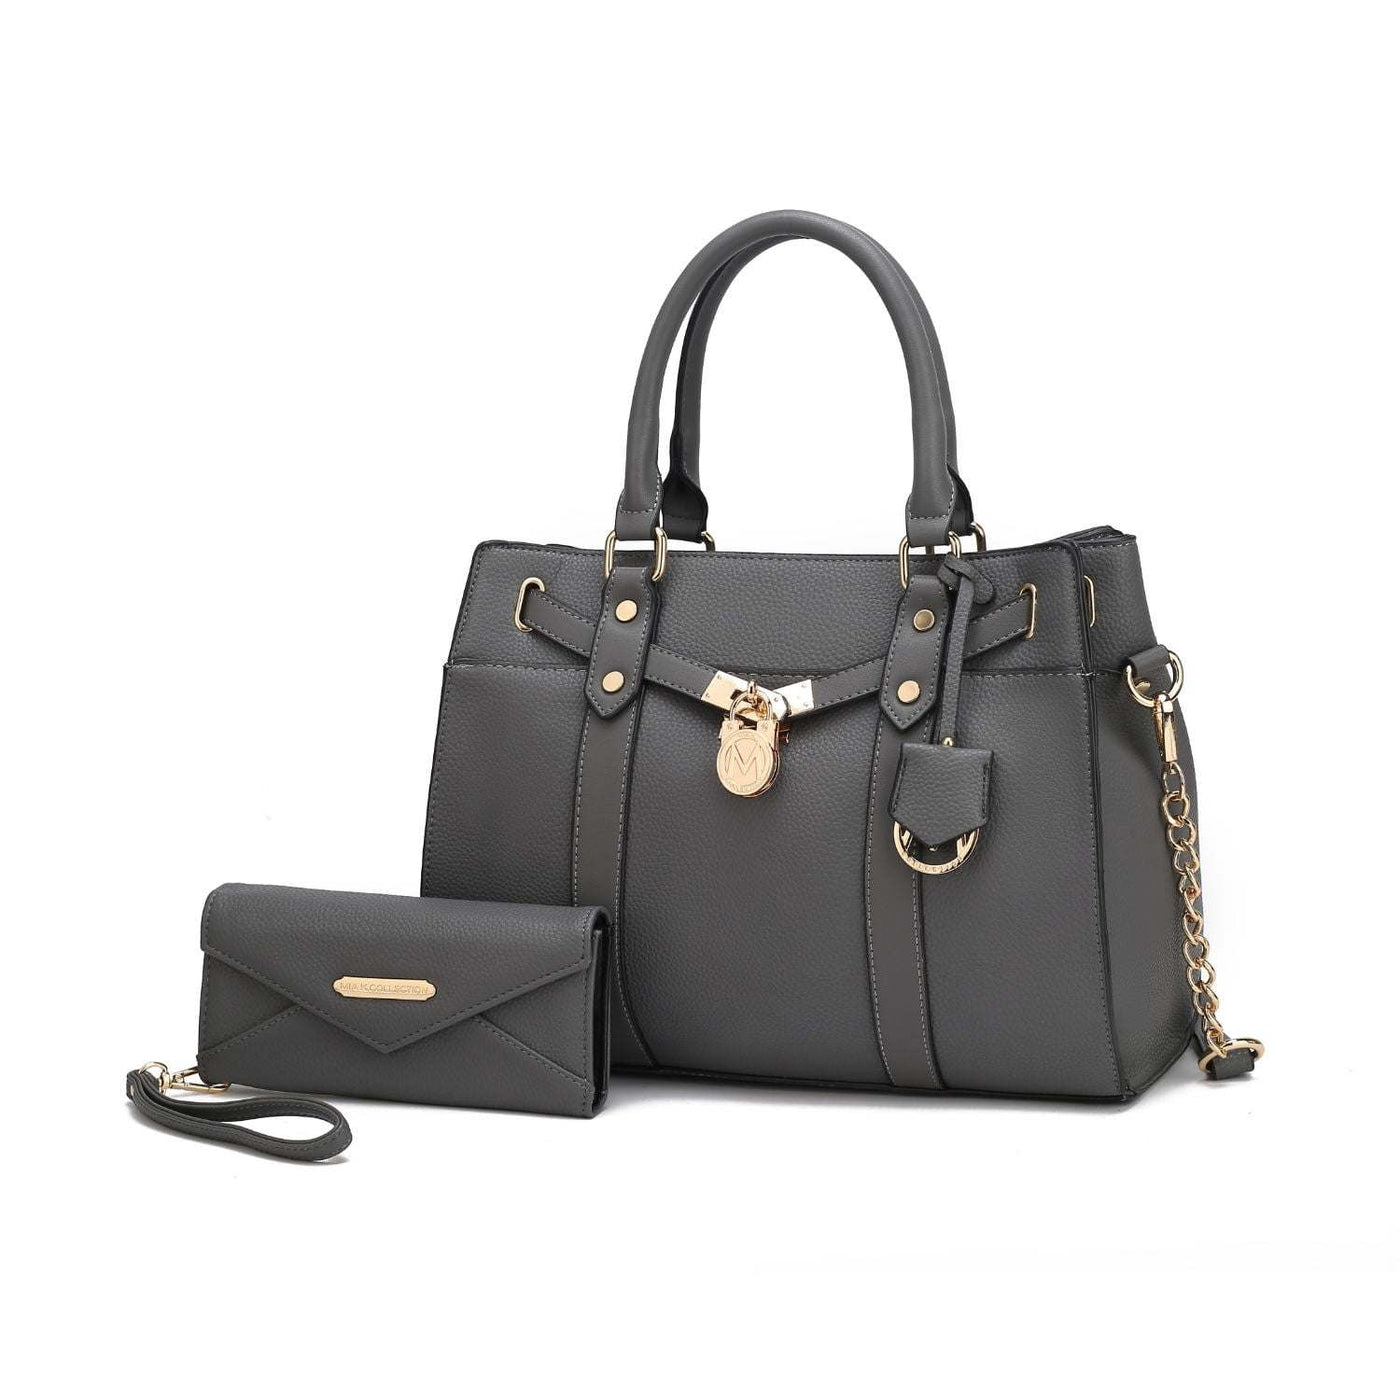 Mia K. Christine Satchel Handbag with Wallet - MKF Collection, Vegan Leather